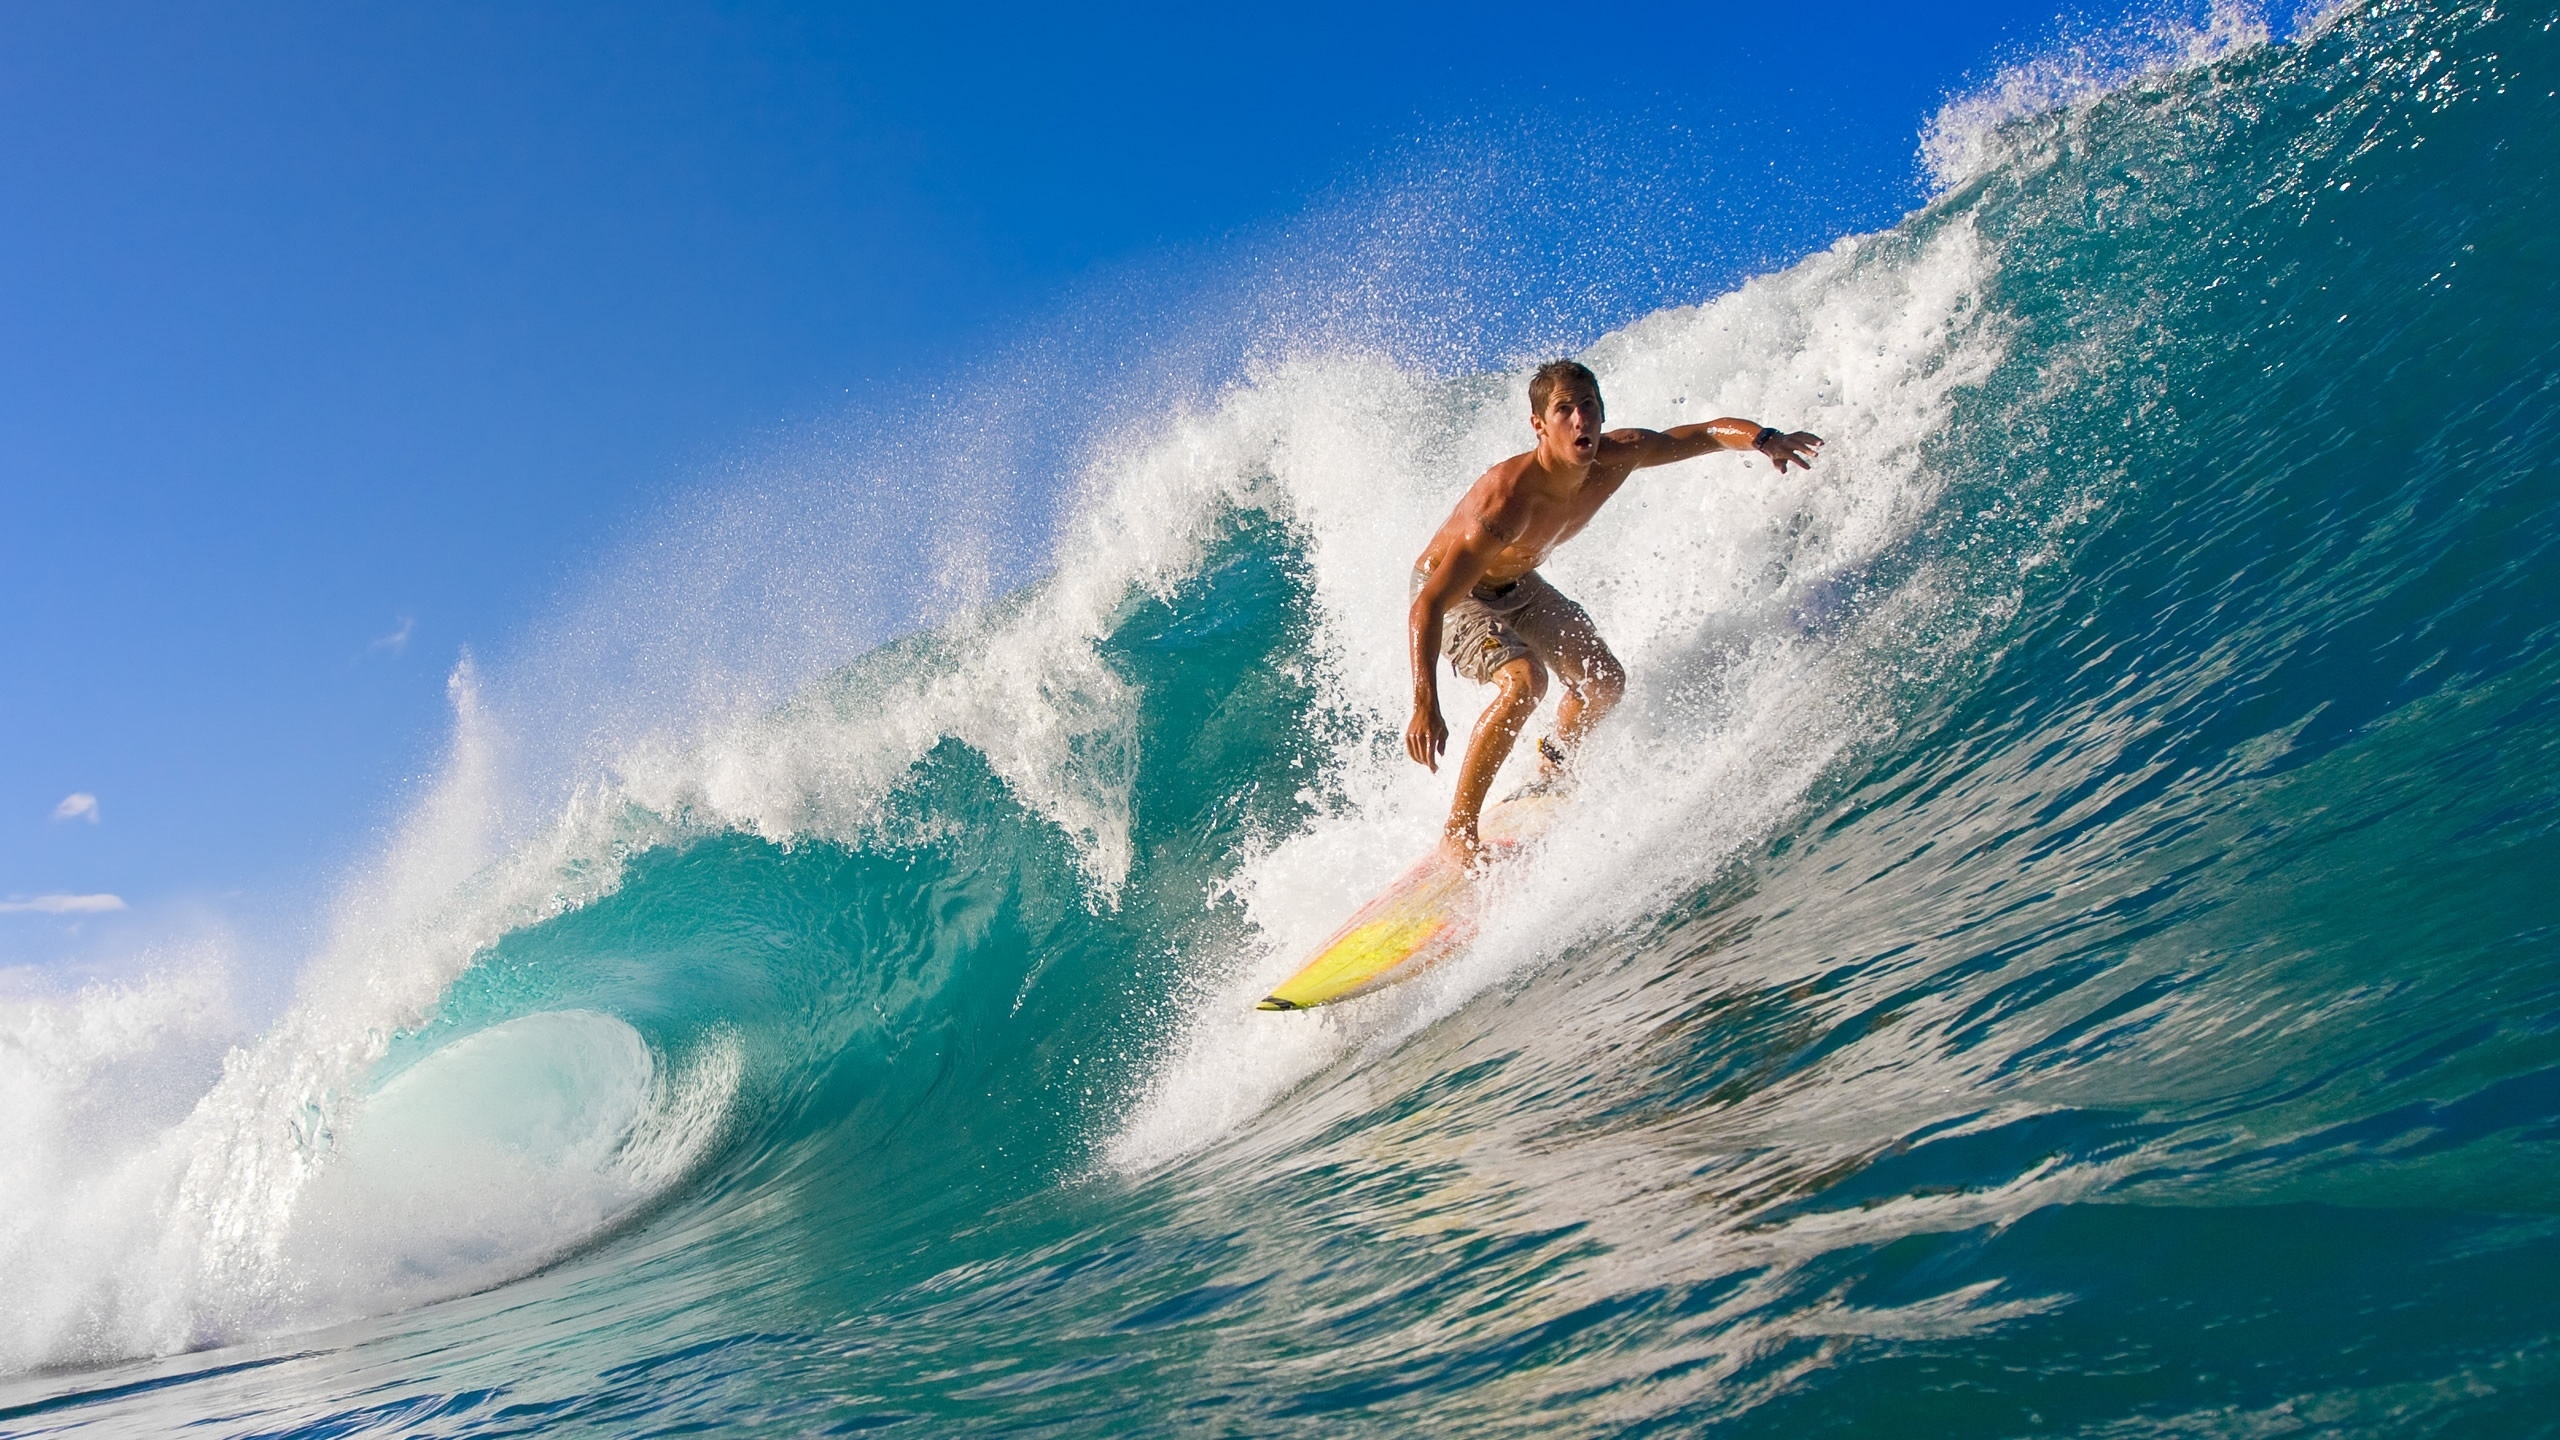 Summer Surf for 2560x1440 HDTV resolution